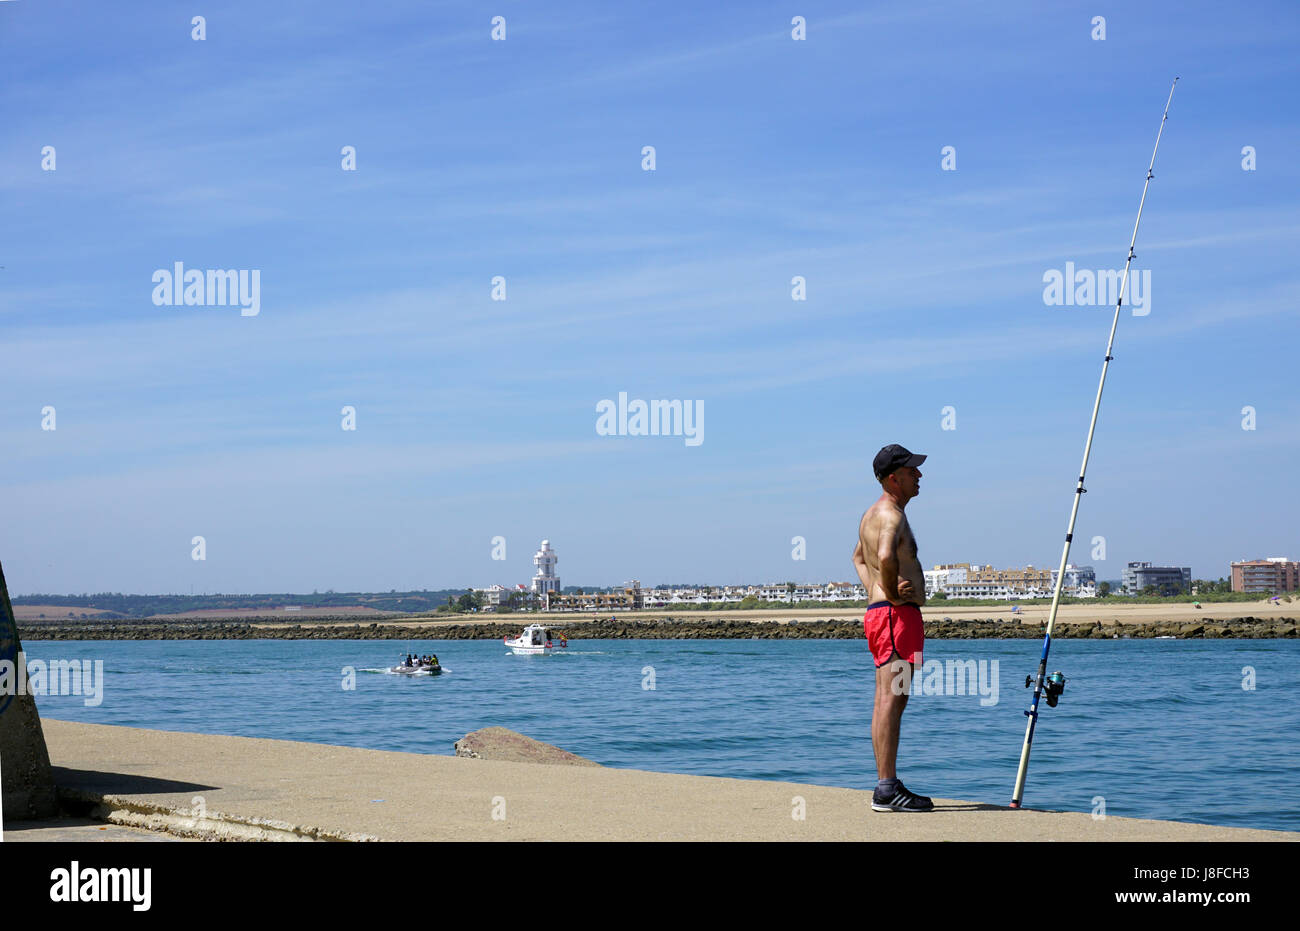 Angler Fisherman in Red Shorts Sea Fishing Spain Costa del la Luz Isla Canela Stock Photo